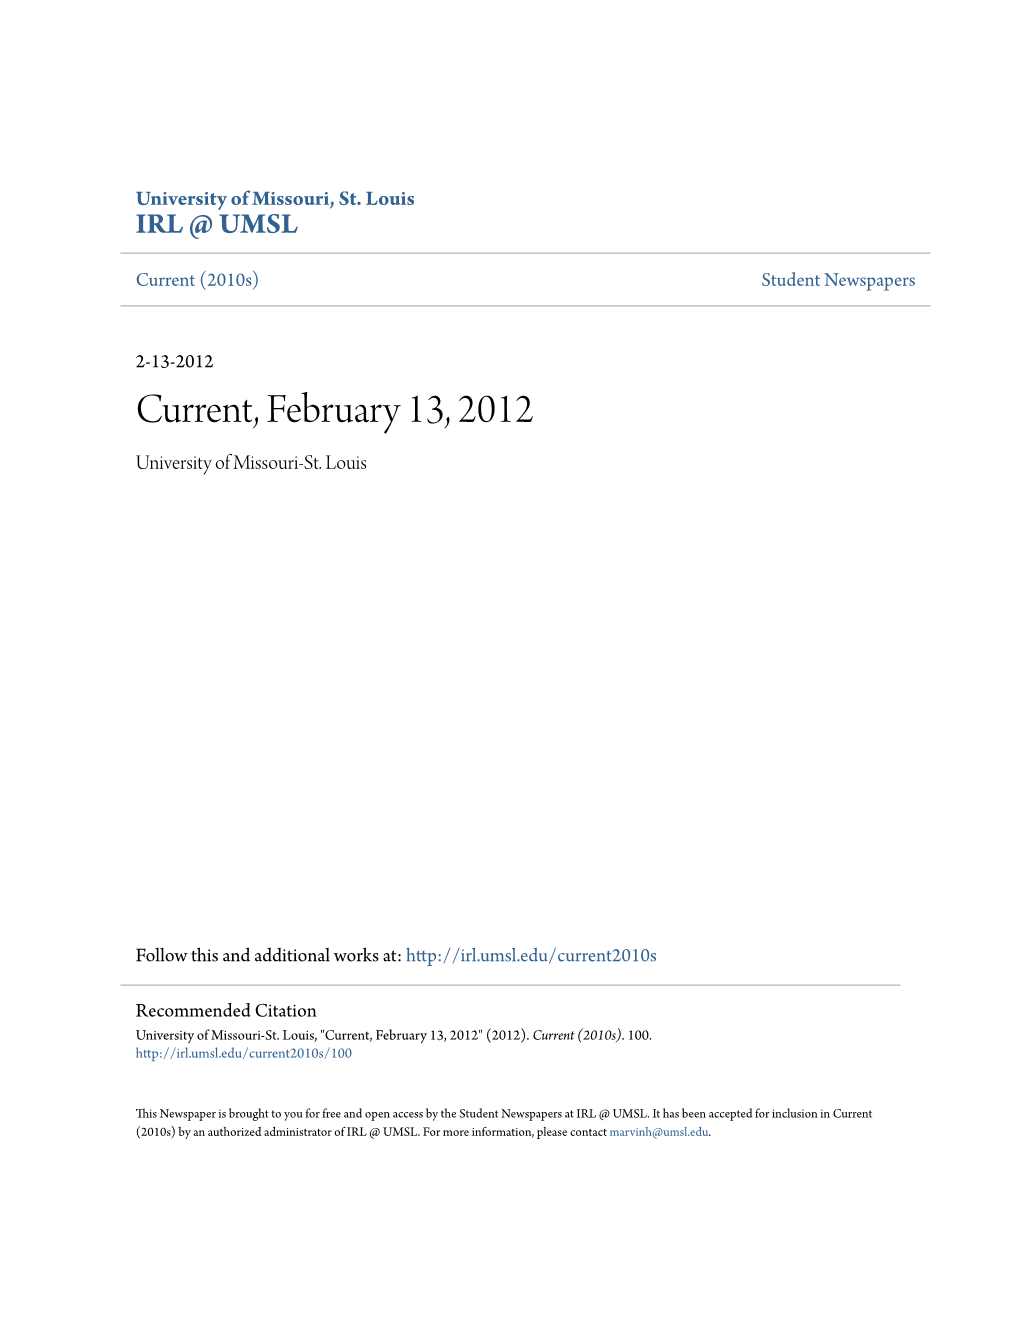 Current, February 13, 2012 University of Missouri-St